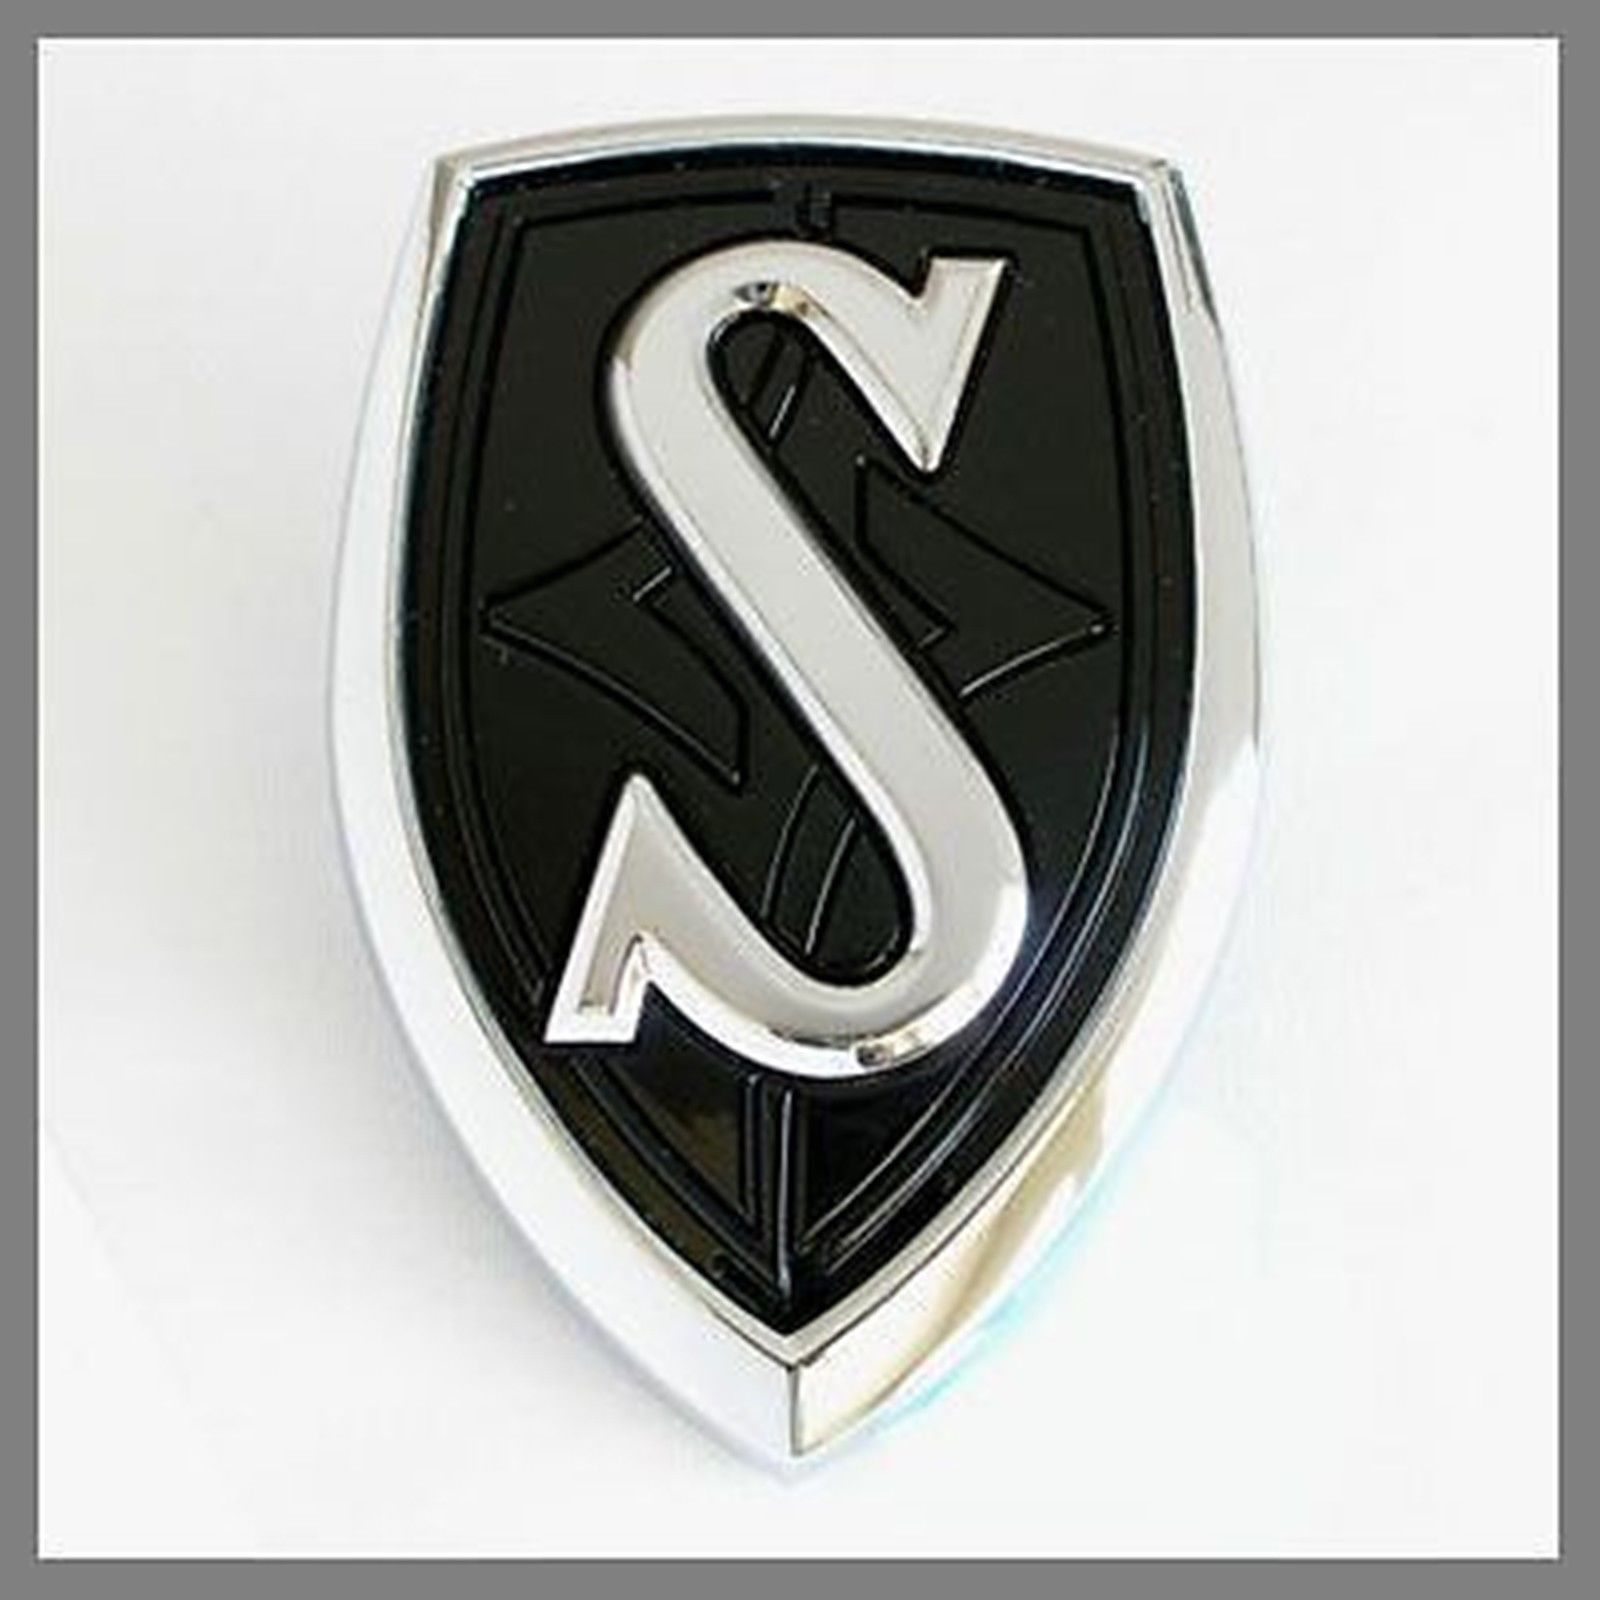 Logos 14. Nissan Silvia s14 лого. Nissan Silvia значок. Логотип Silvia.